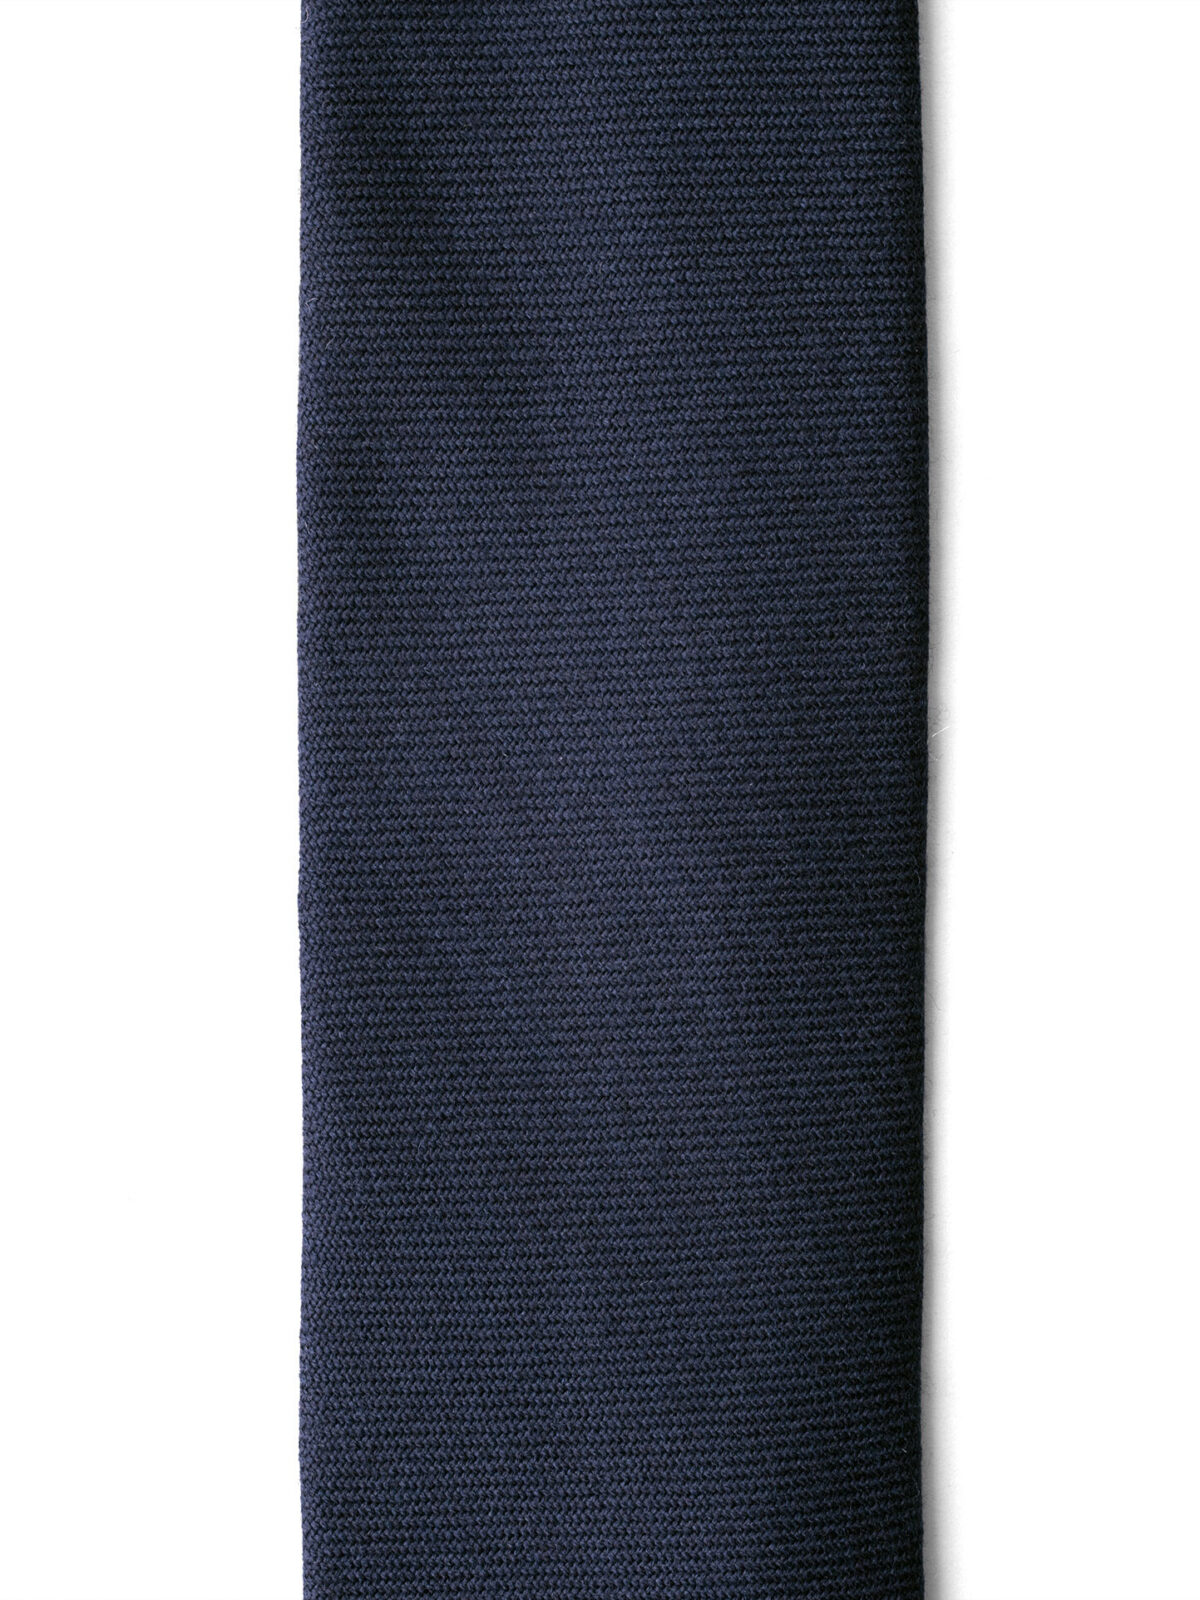 Navy Blue Wool Flannel Tie